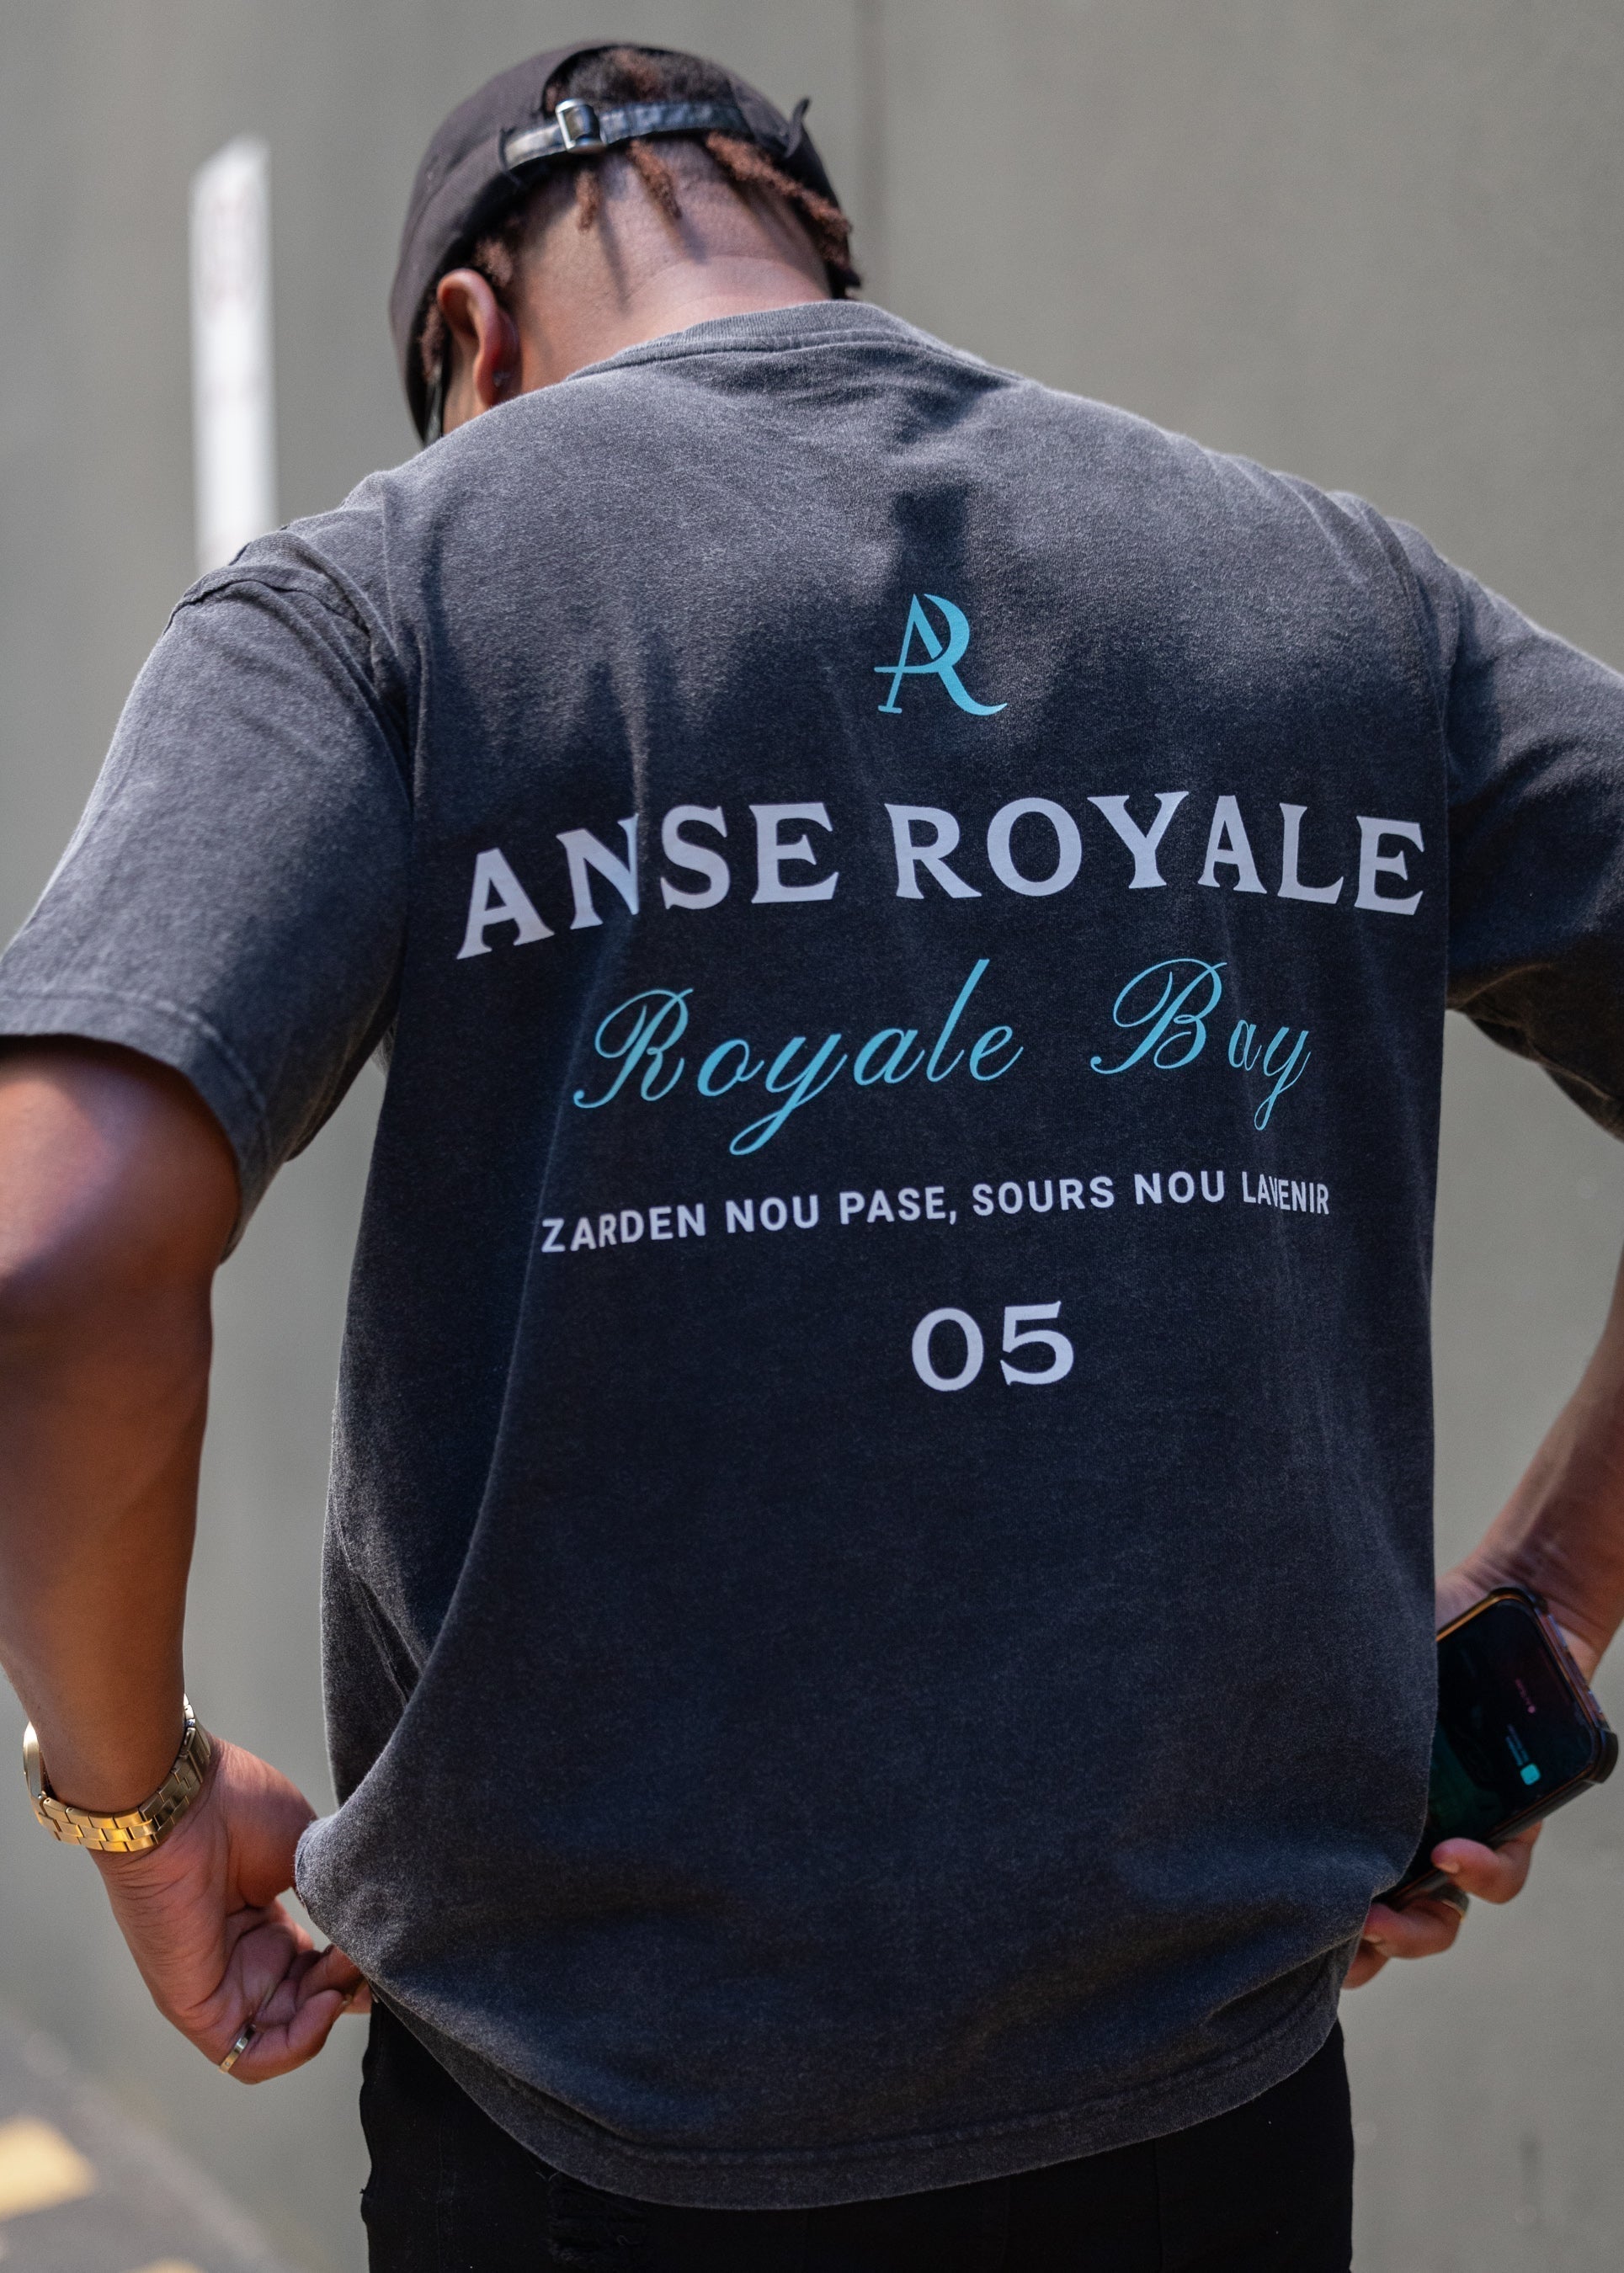 ROYALE BAY 05 - Premium Shirts & Tops from ANSE ROYALE - Just $50! Shop now at ANSE ROYALE